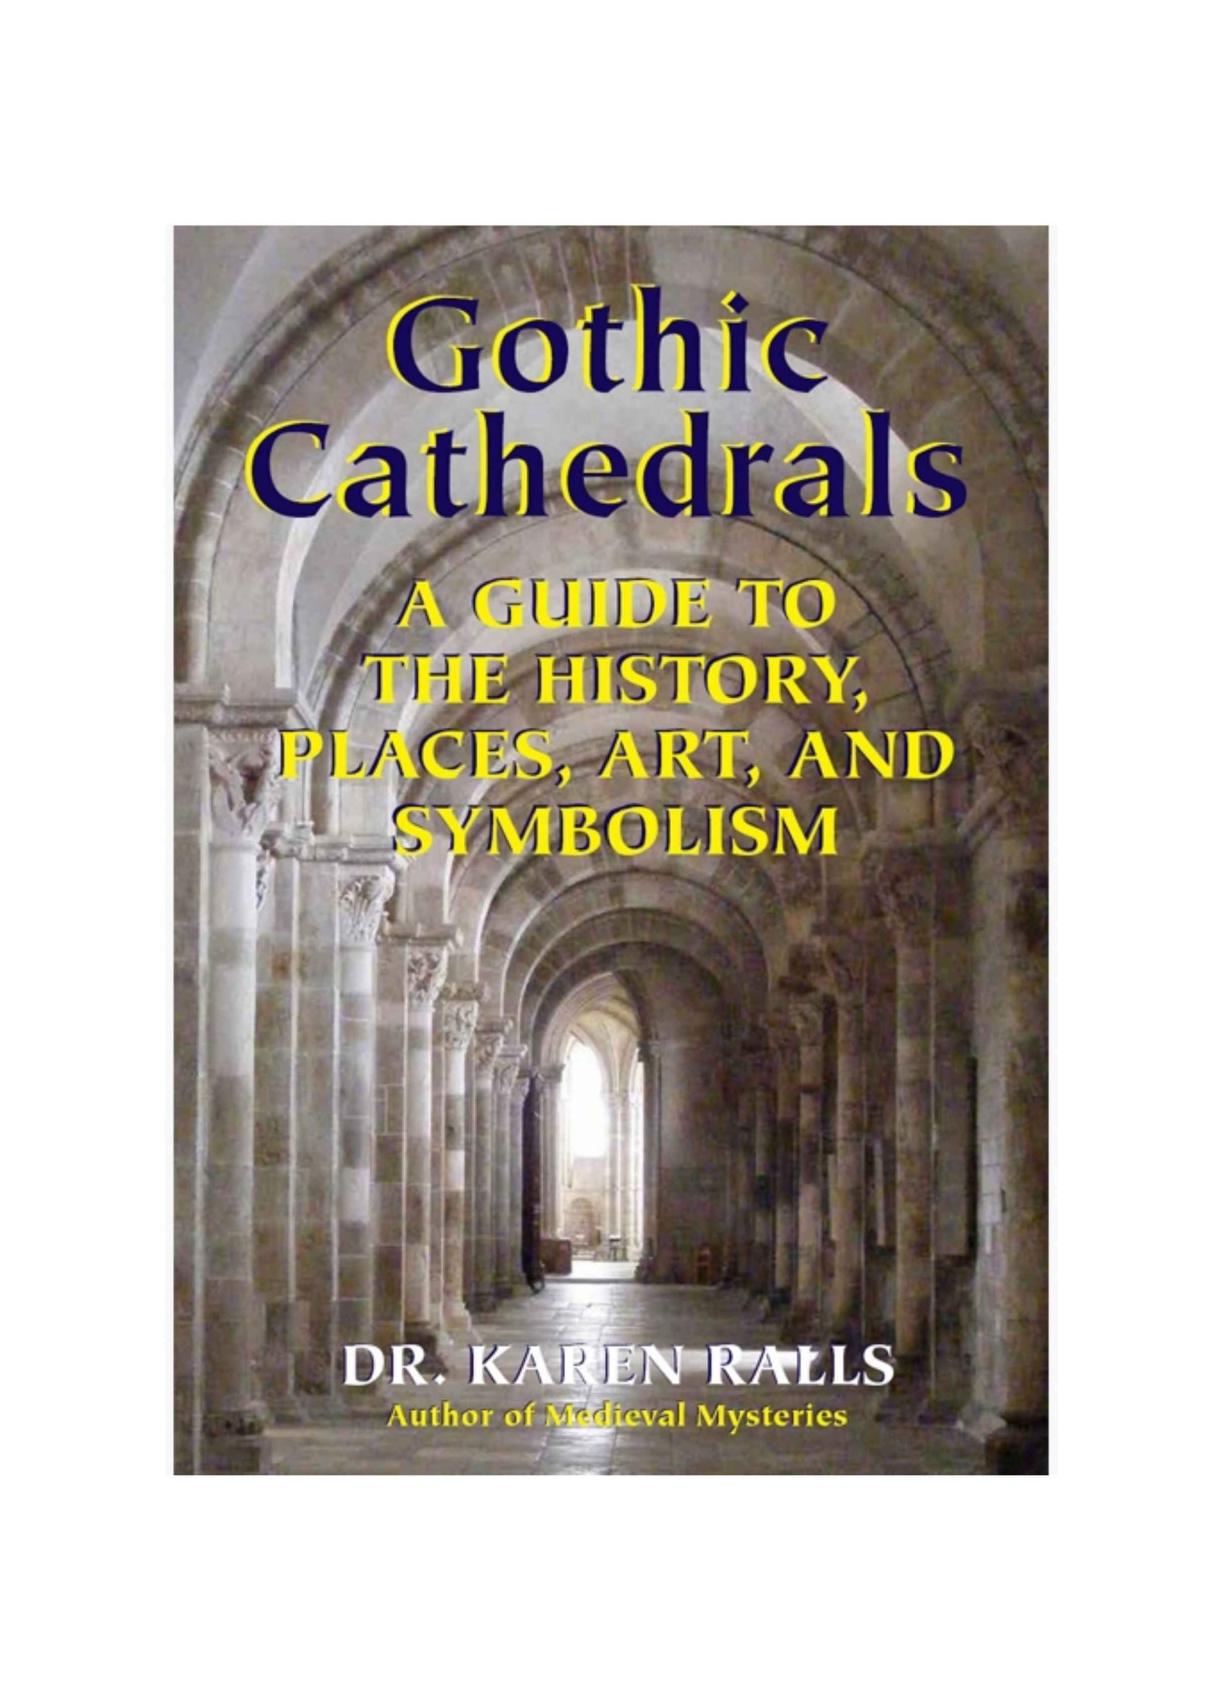 Gothic Cathedrals by Karen Ralls